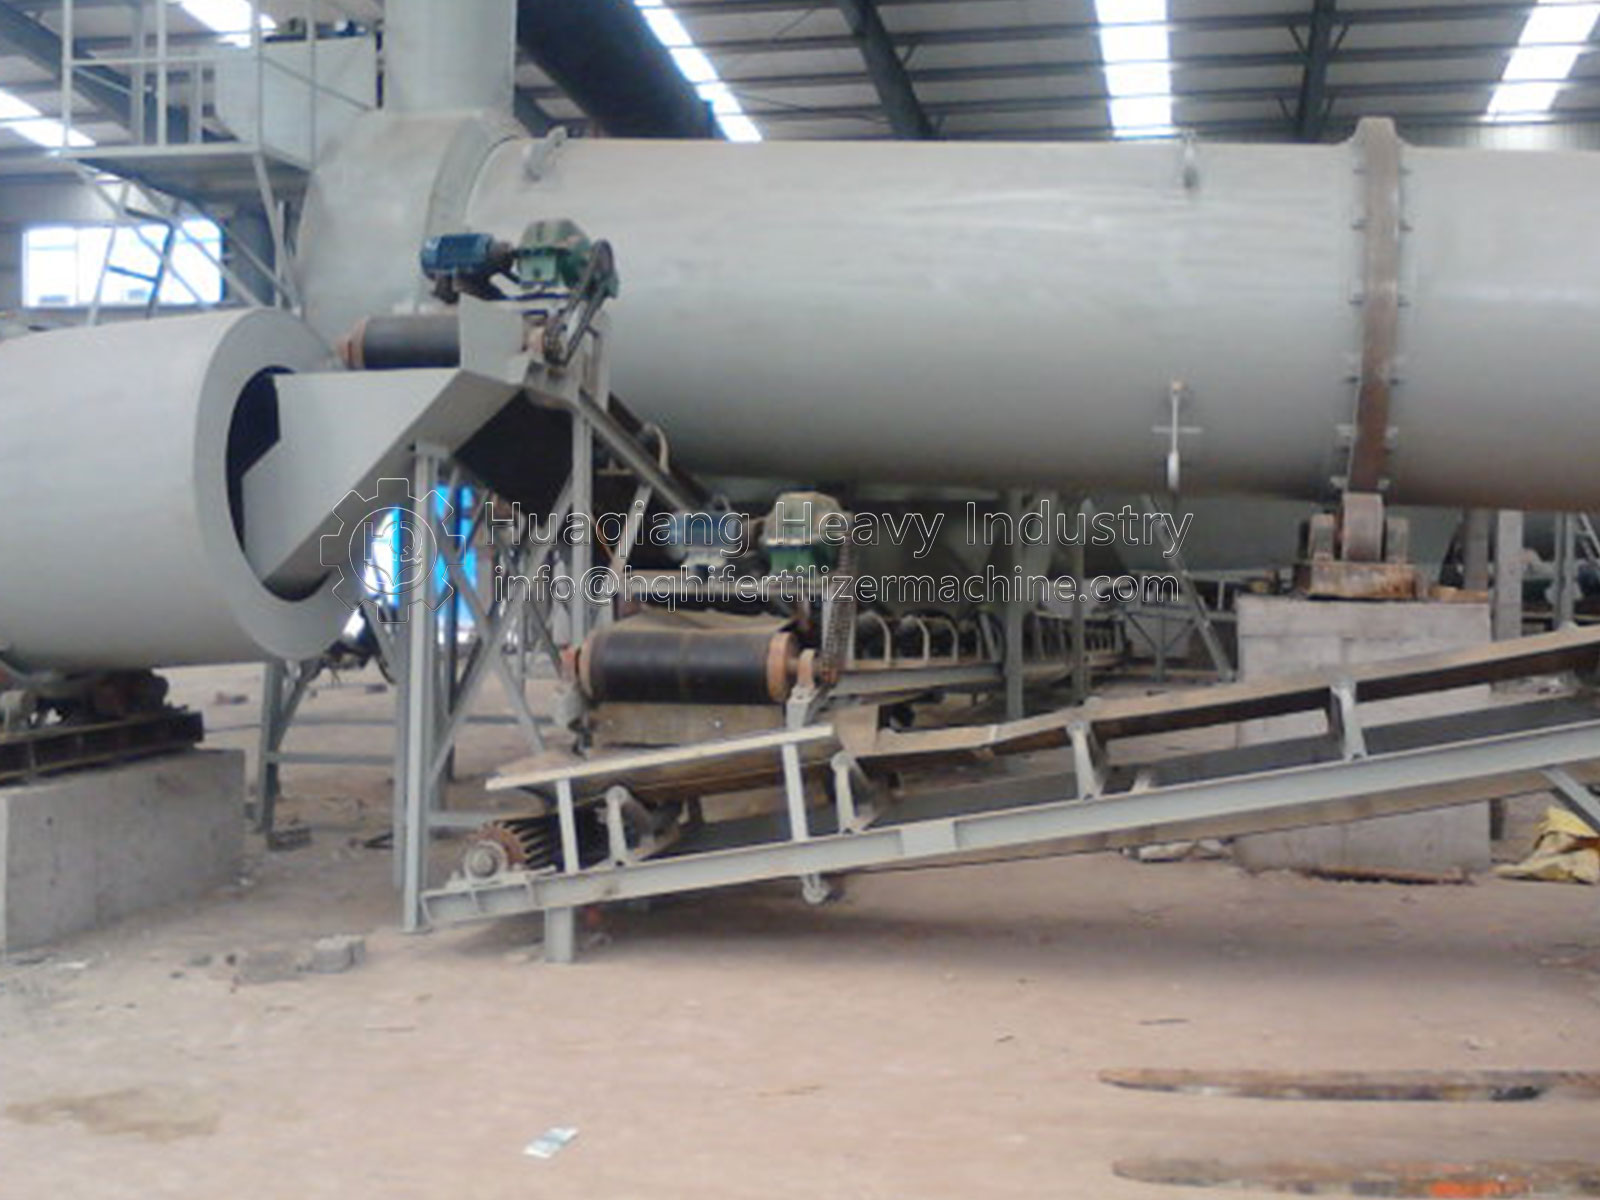 Algeria complete equipment of npk fertilizer manufacturing process